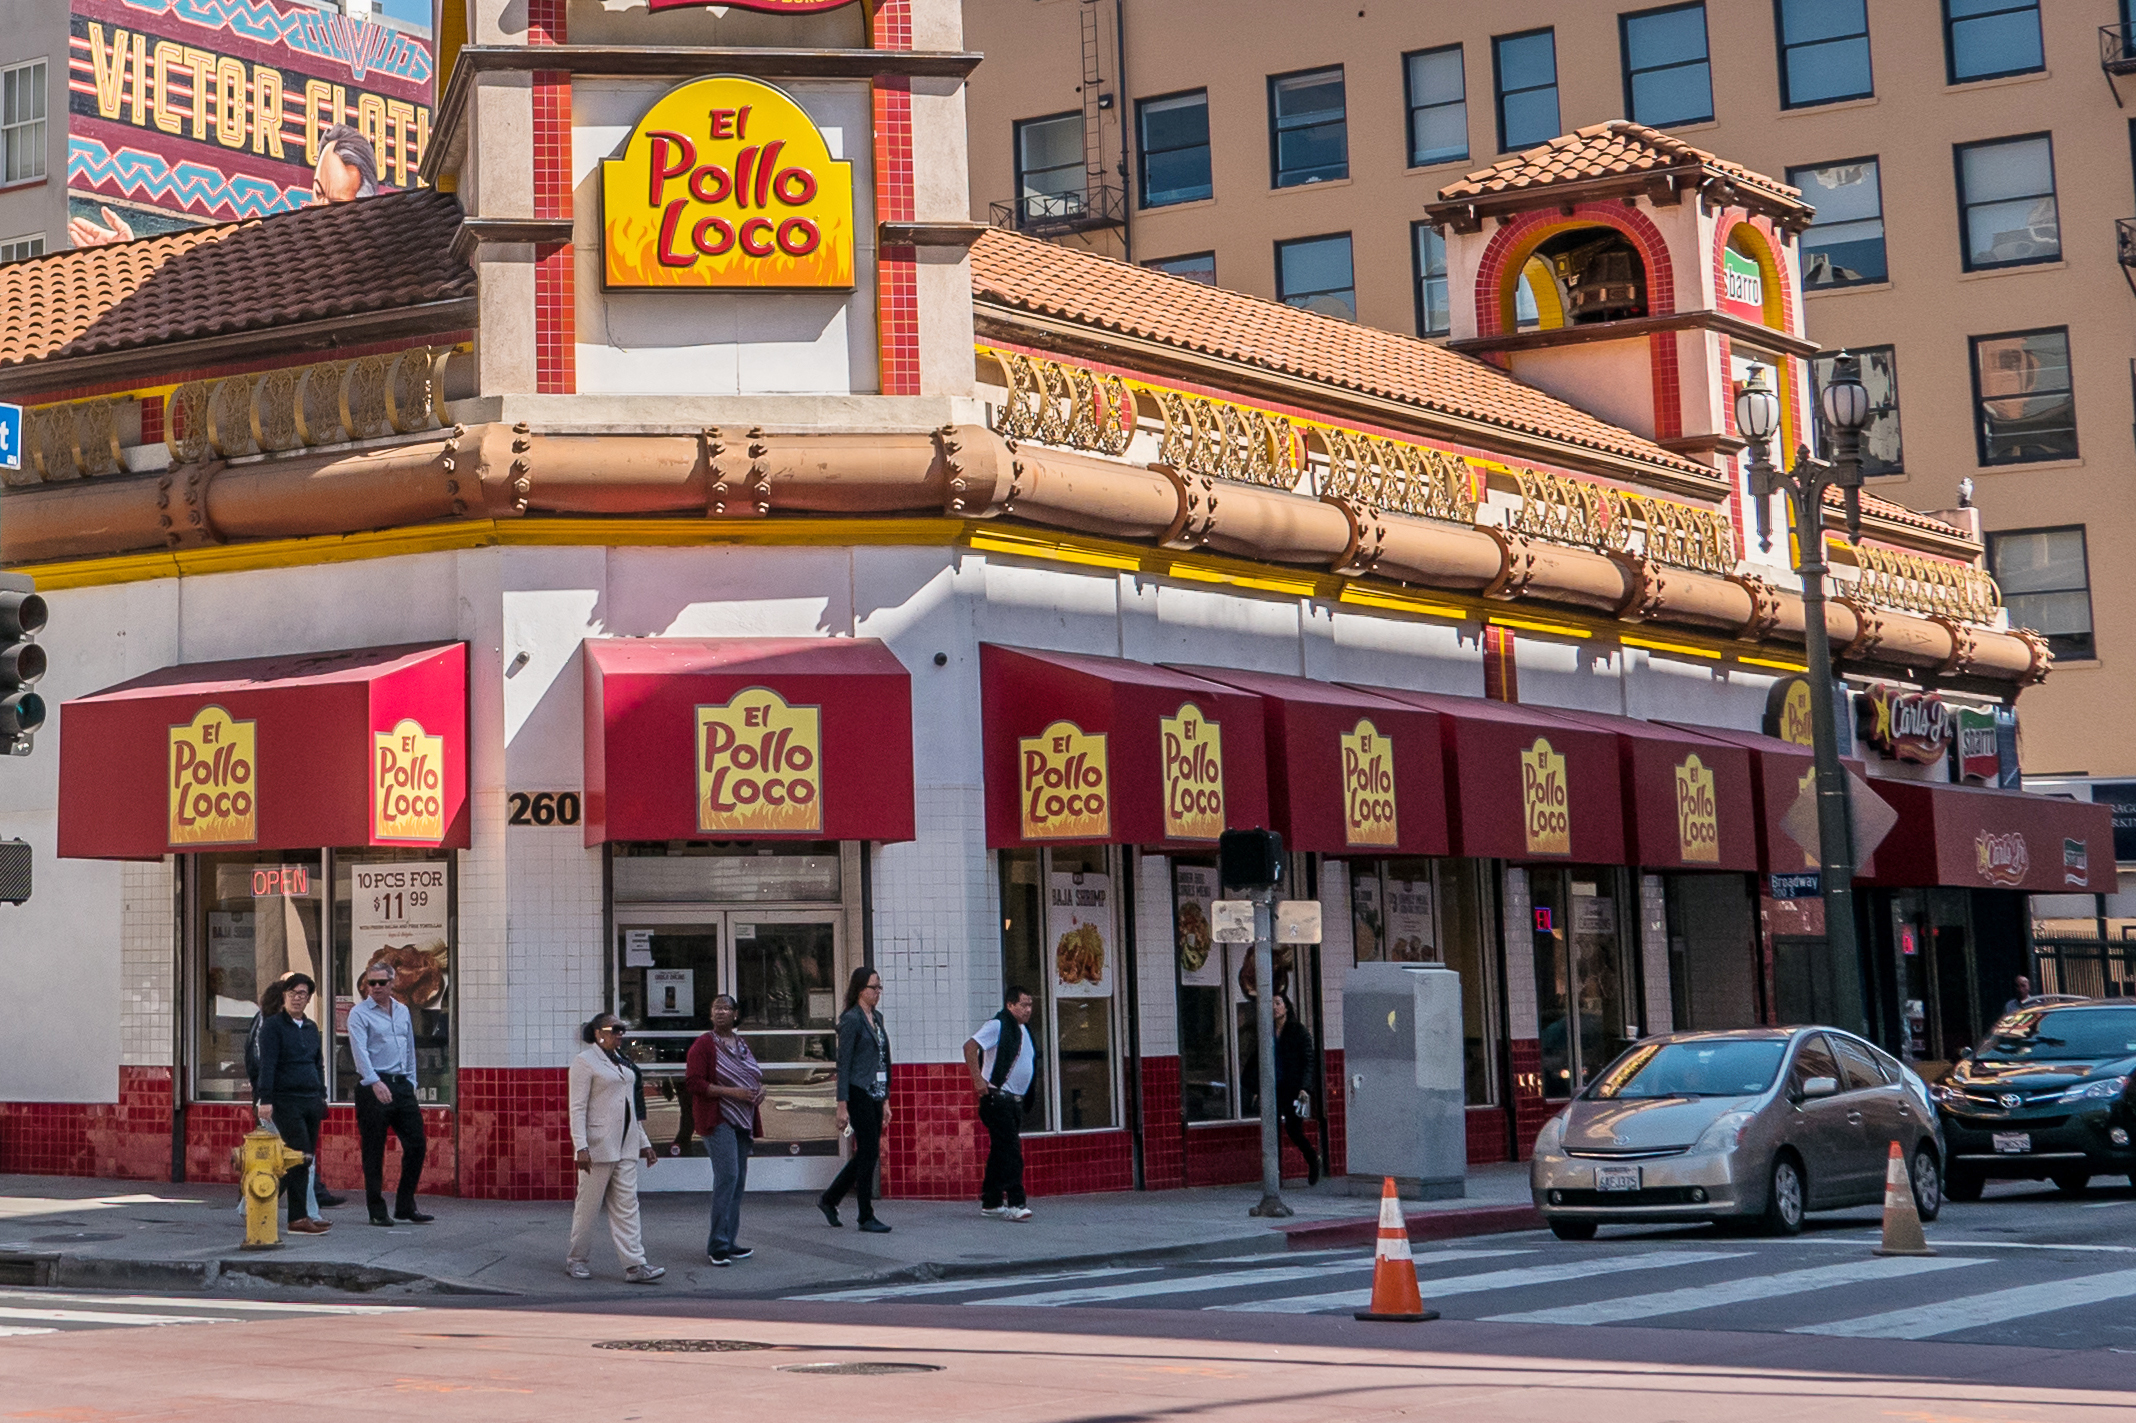 180405-fast-food-chains-el-pollo-loco